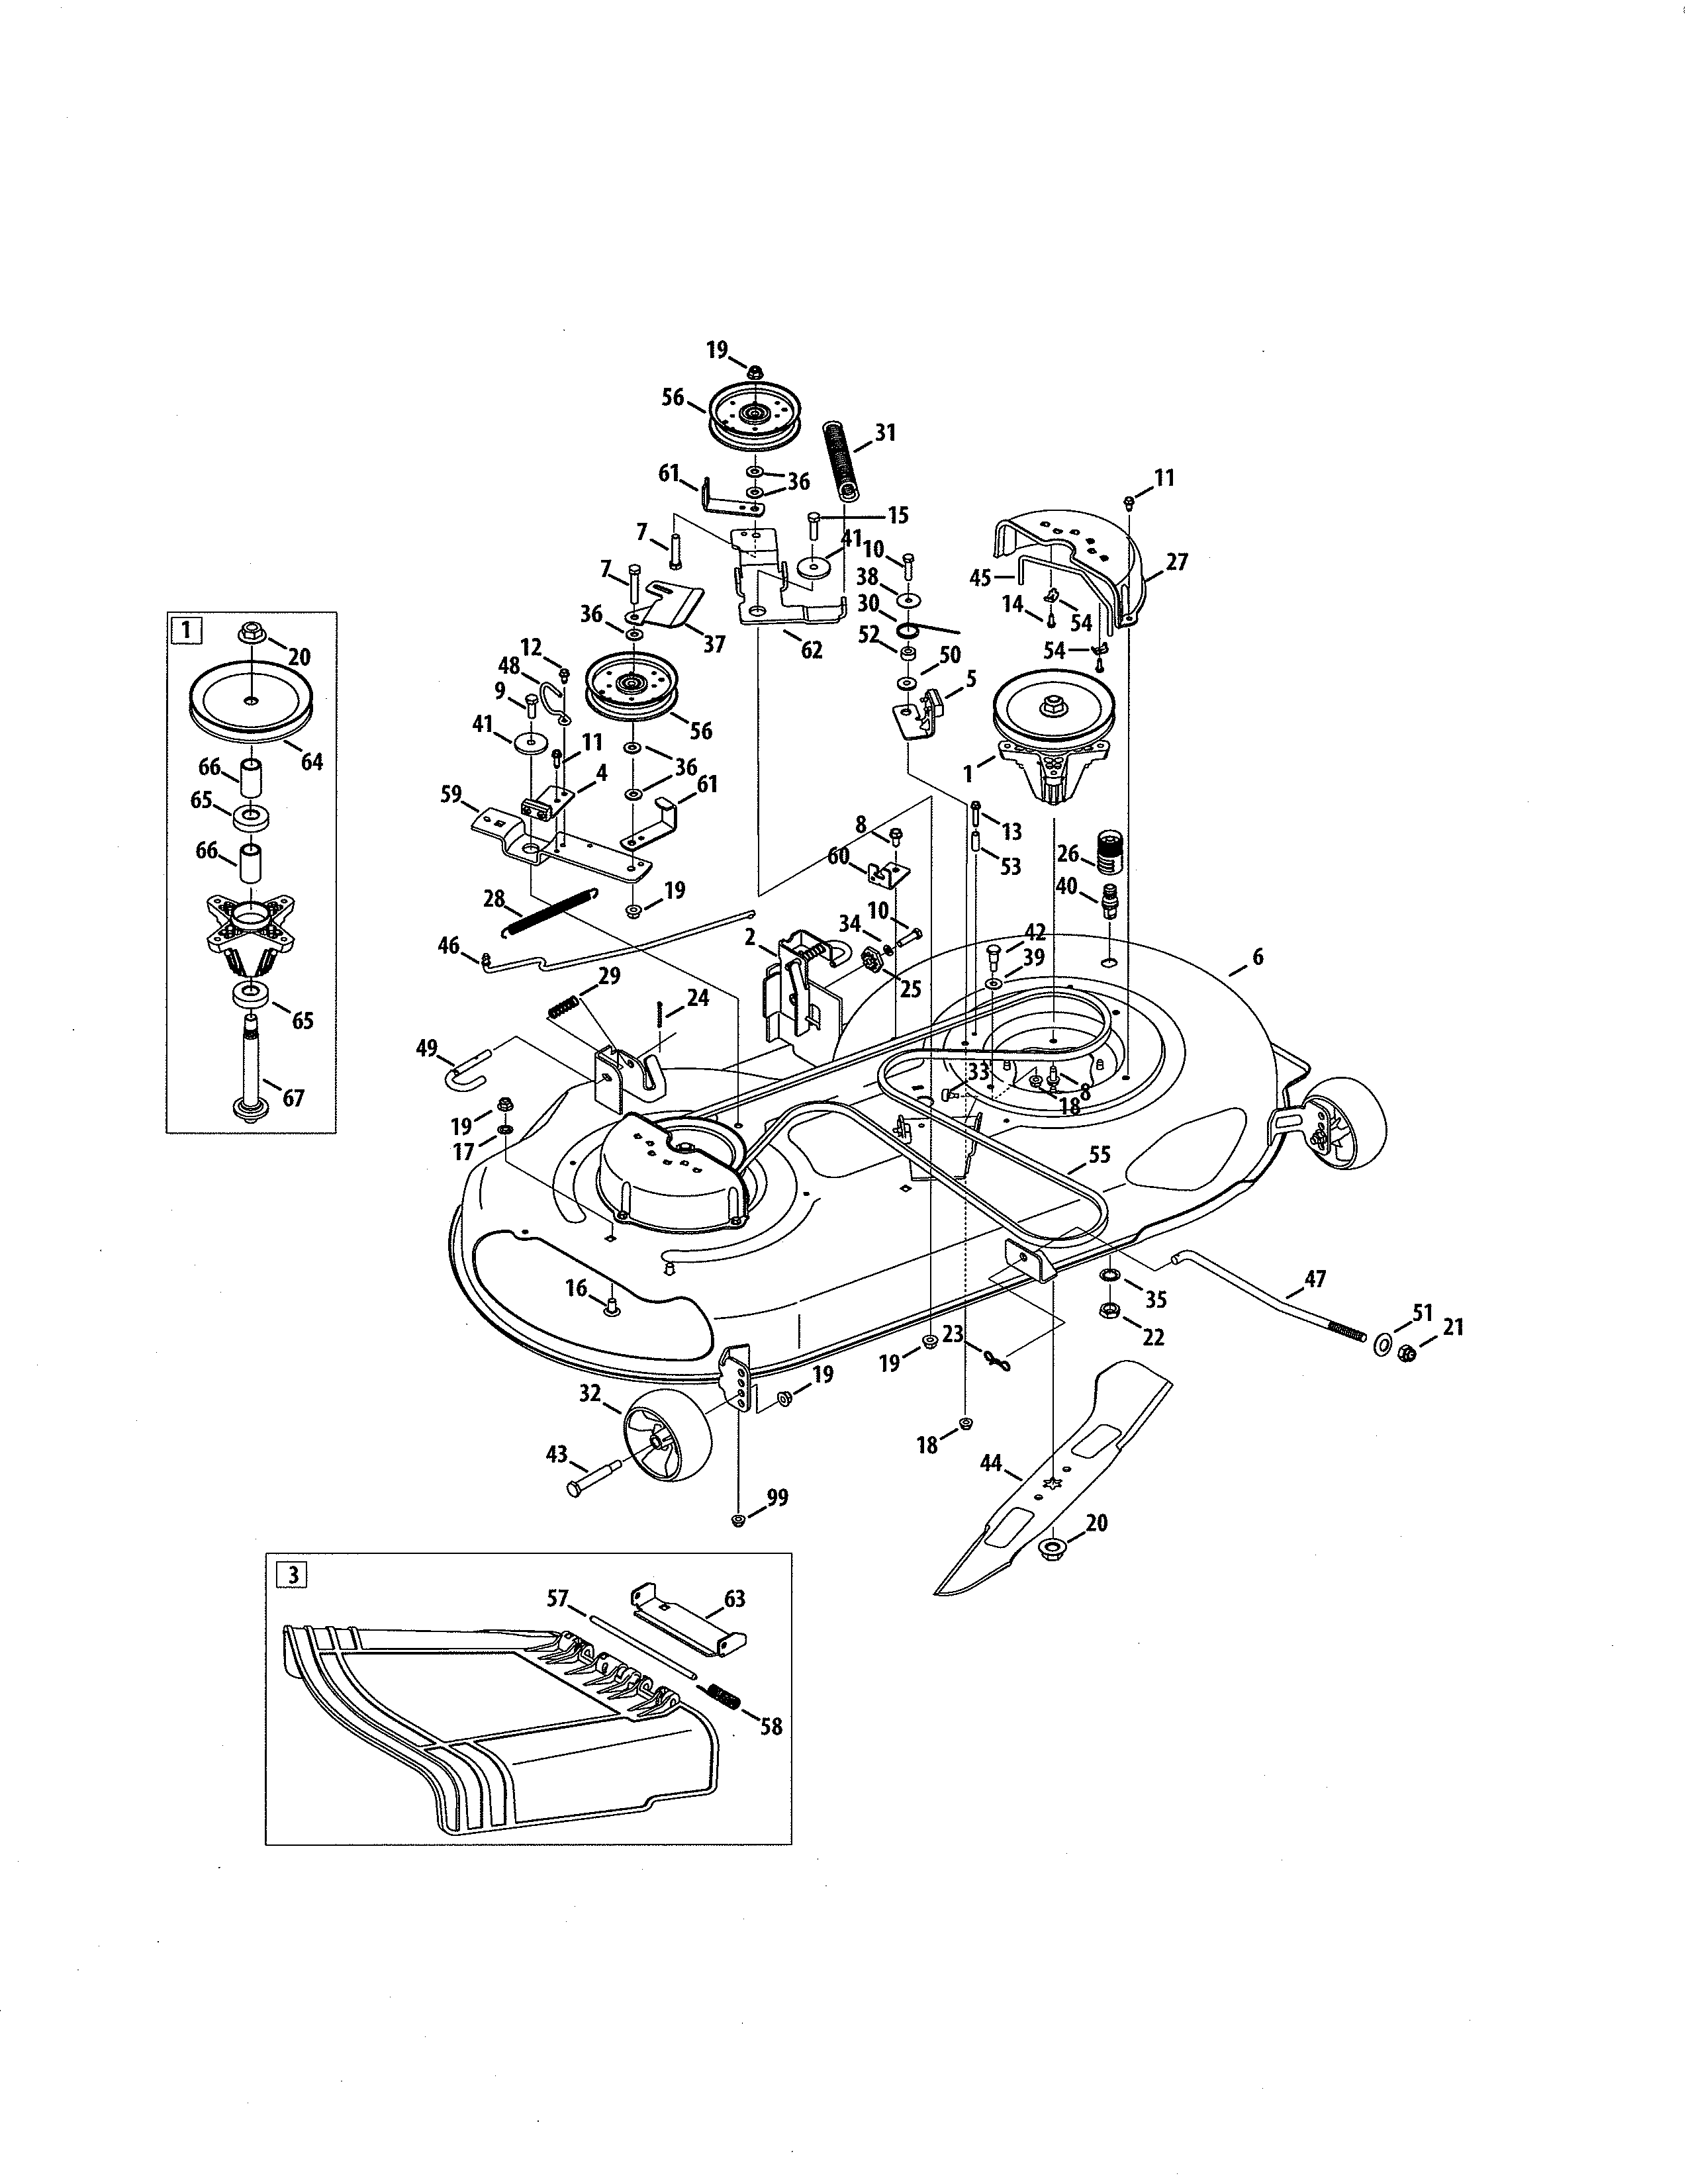 35 Craftsman Lt2000 Parts Diagram